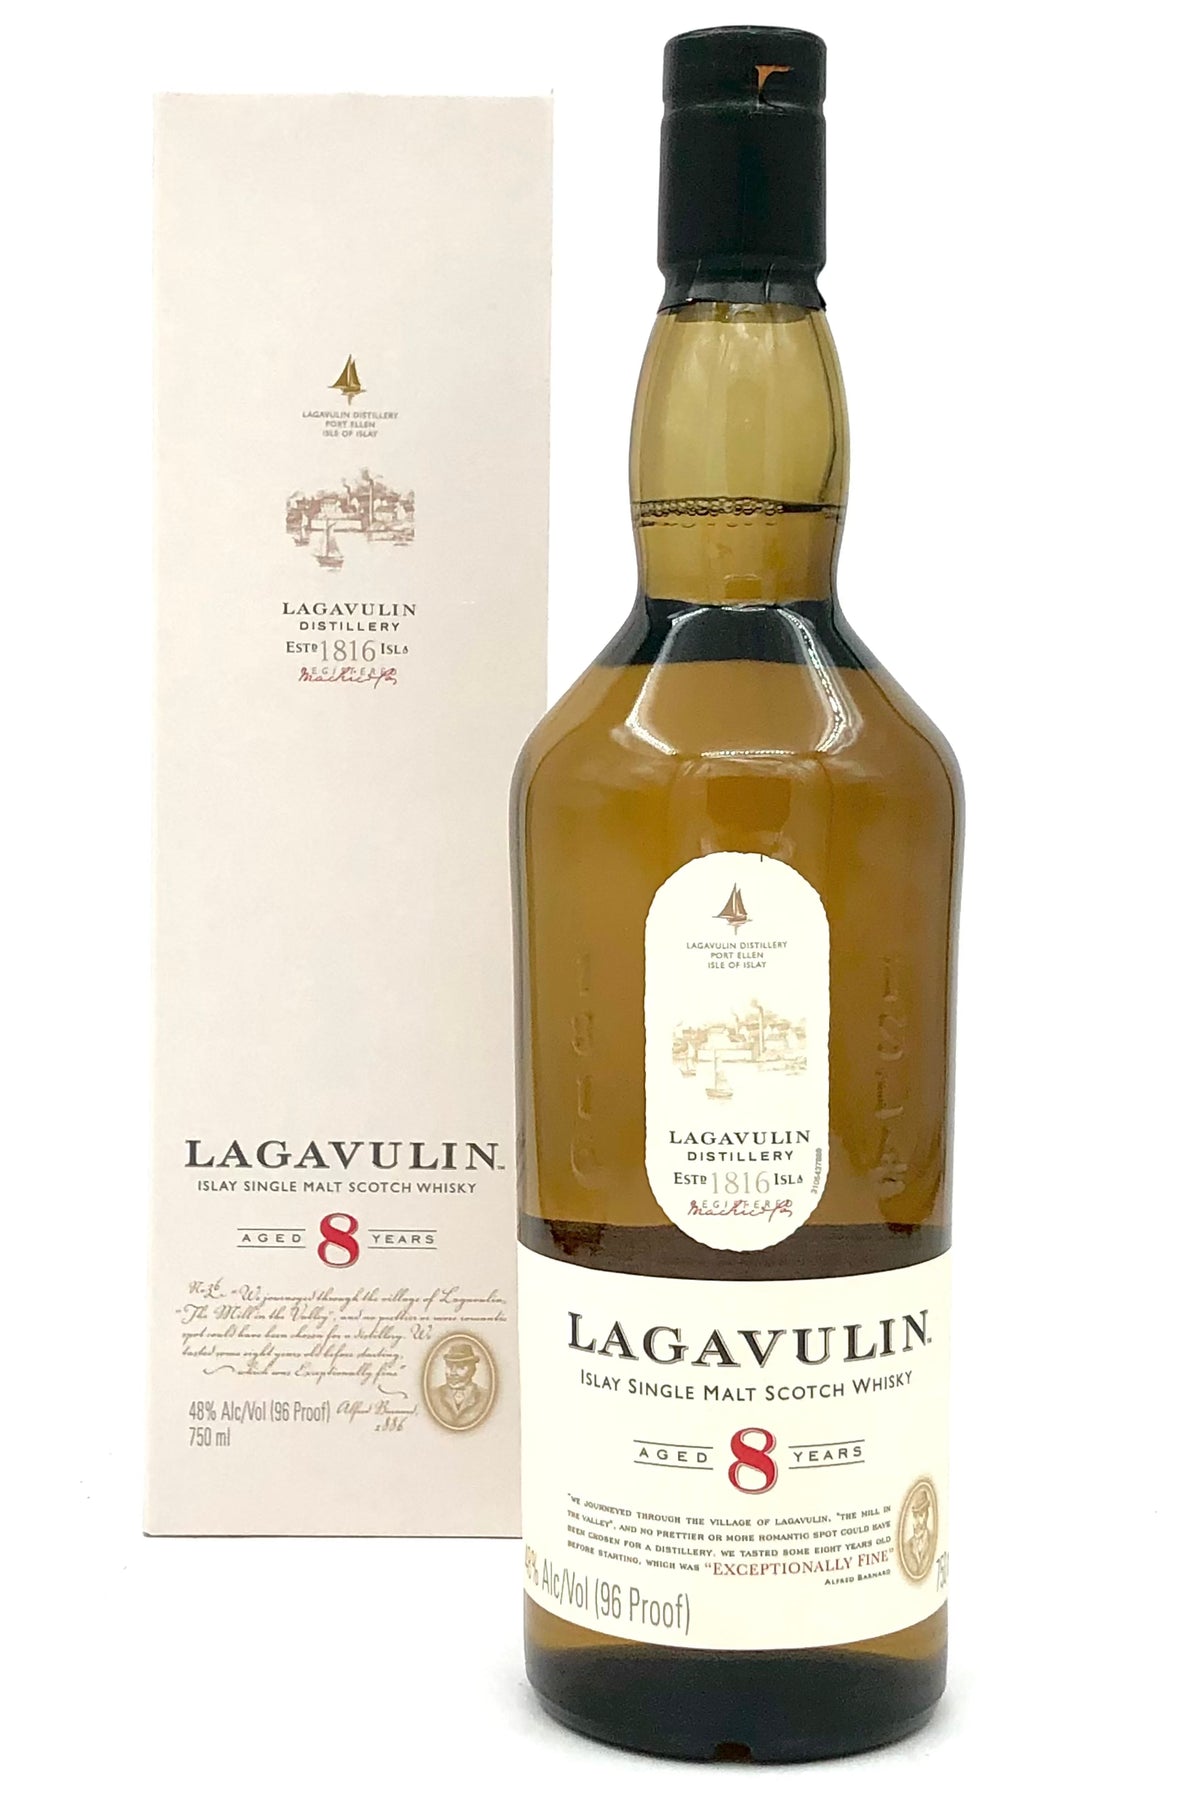 Lagavulin Aged 8 Years Single Malt Scotch Whisky